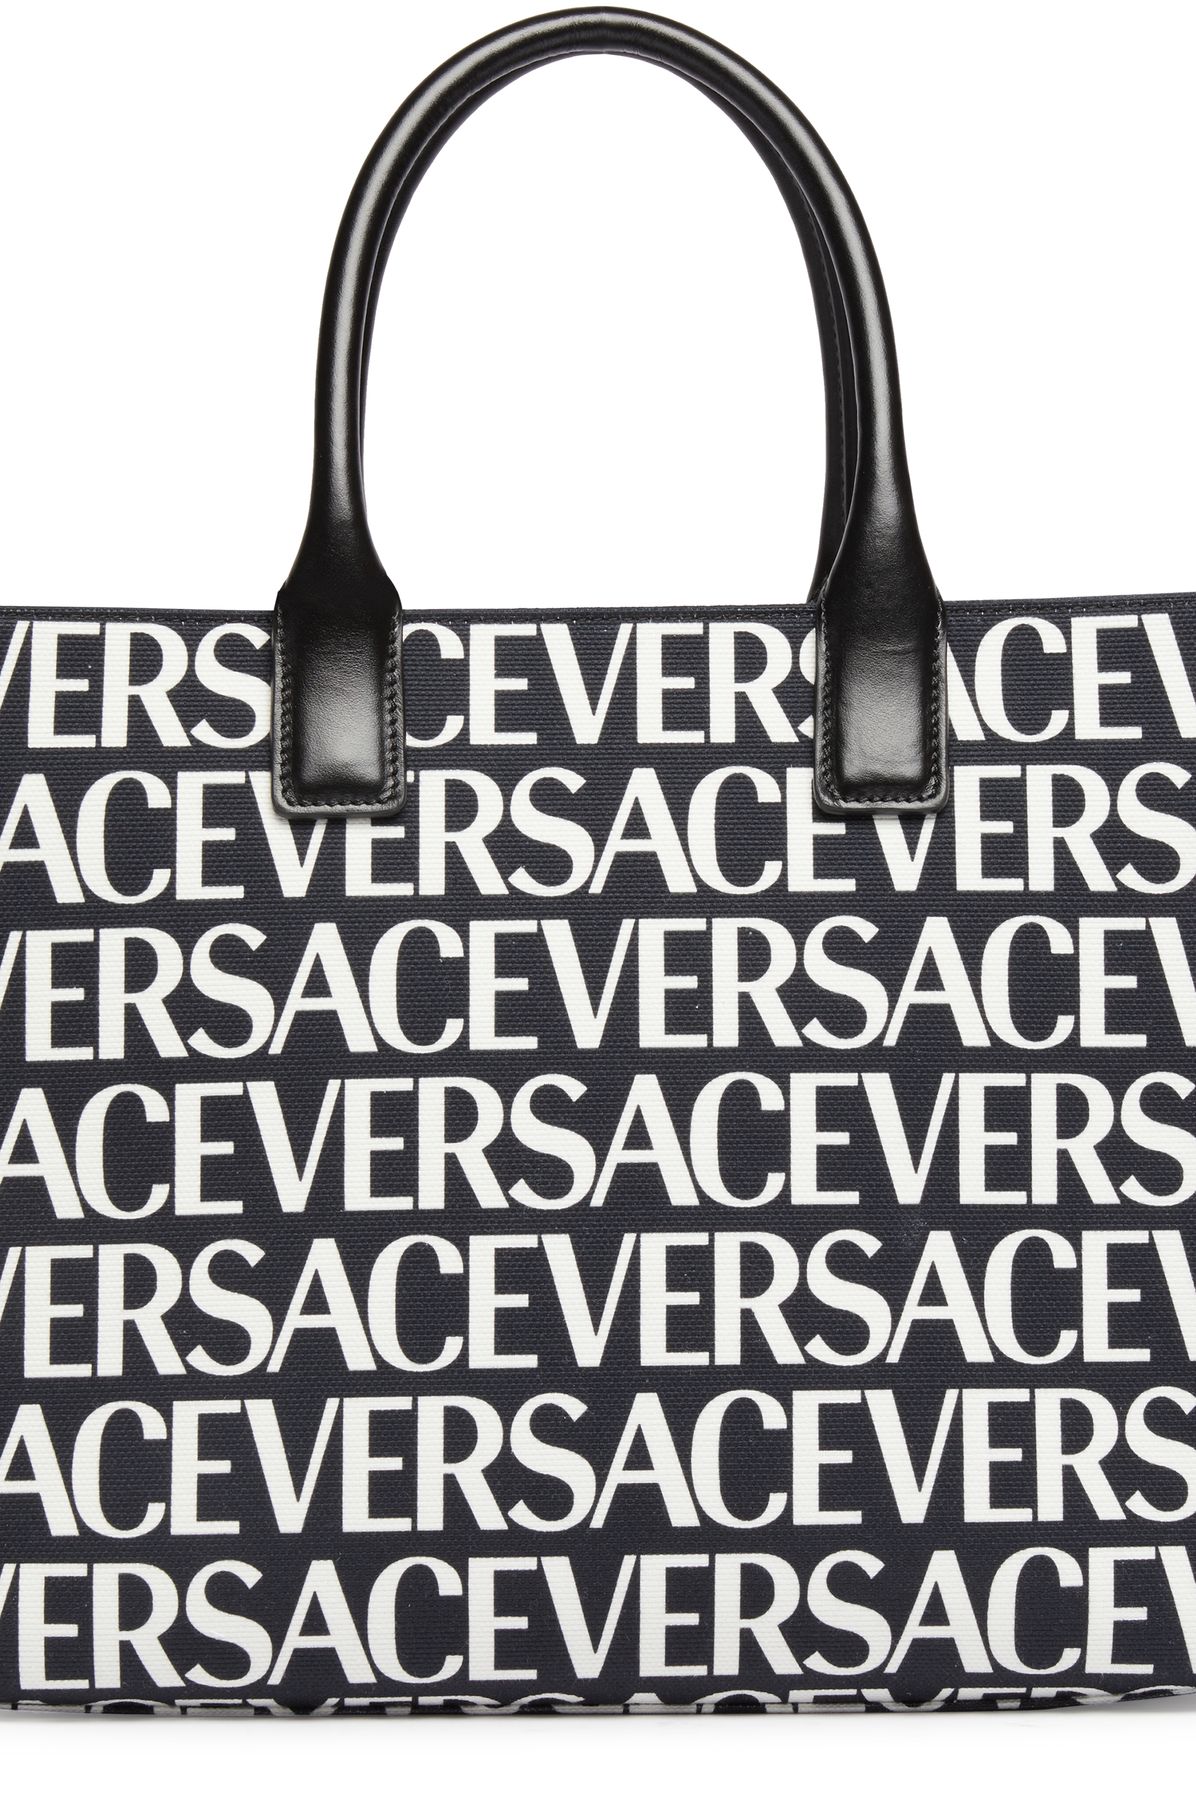 Versace Versace tote bag